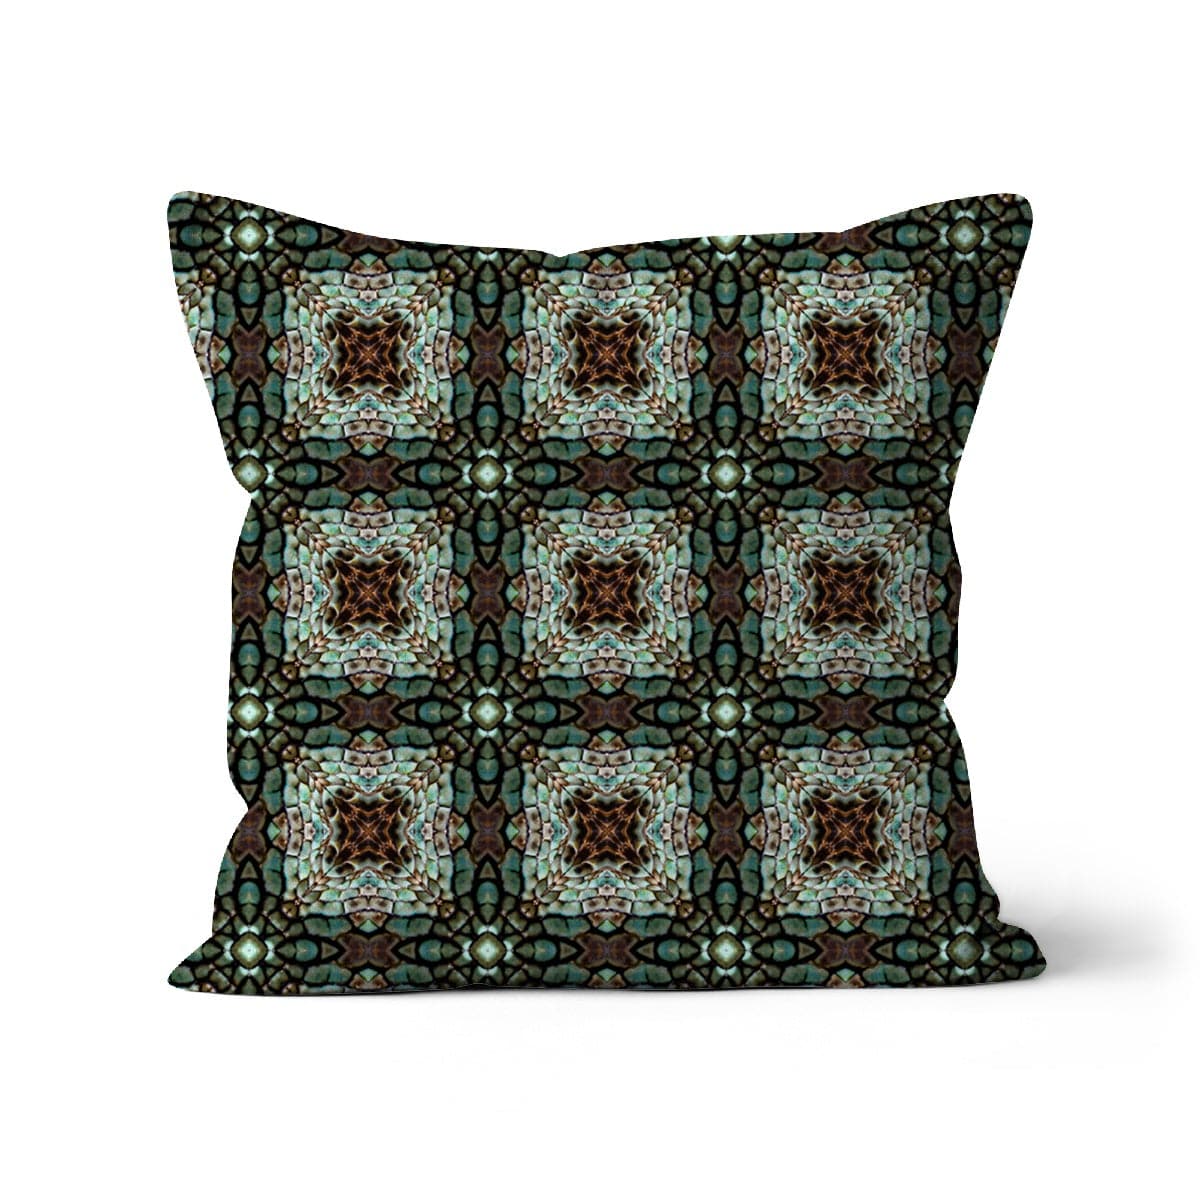 Snake skin pattern I Meditation Pillow/Cushion, by Sensus Studio Design